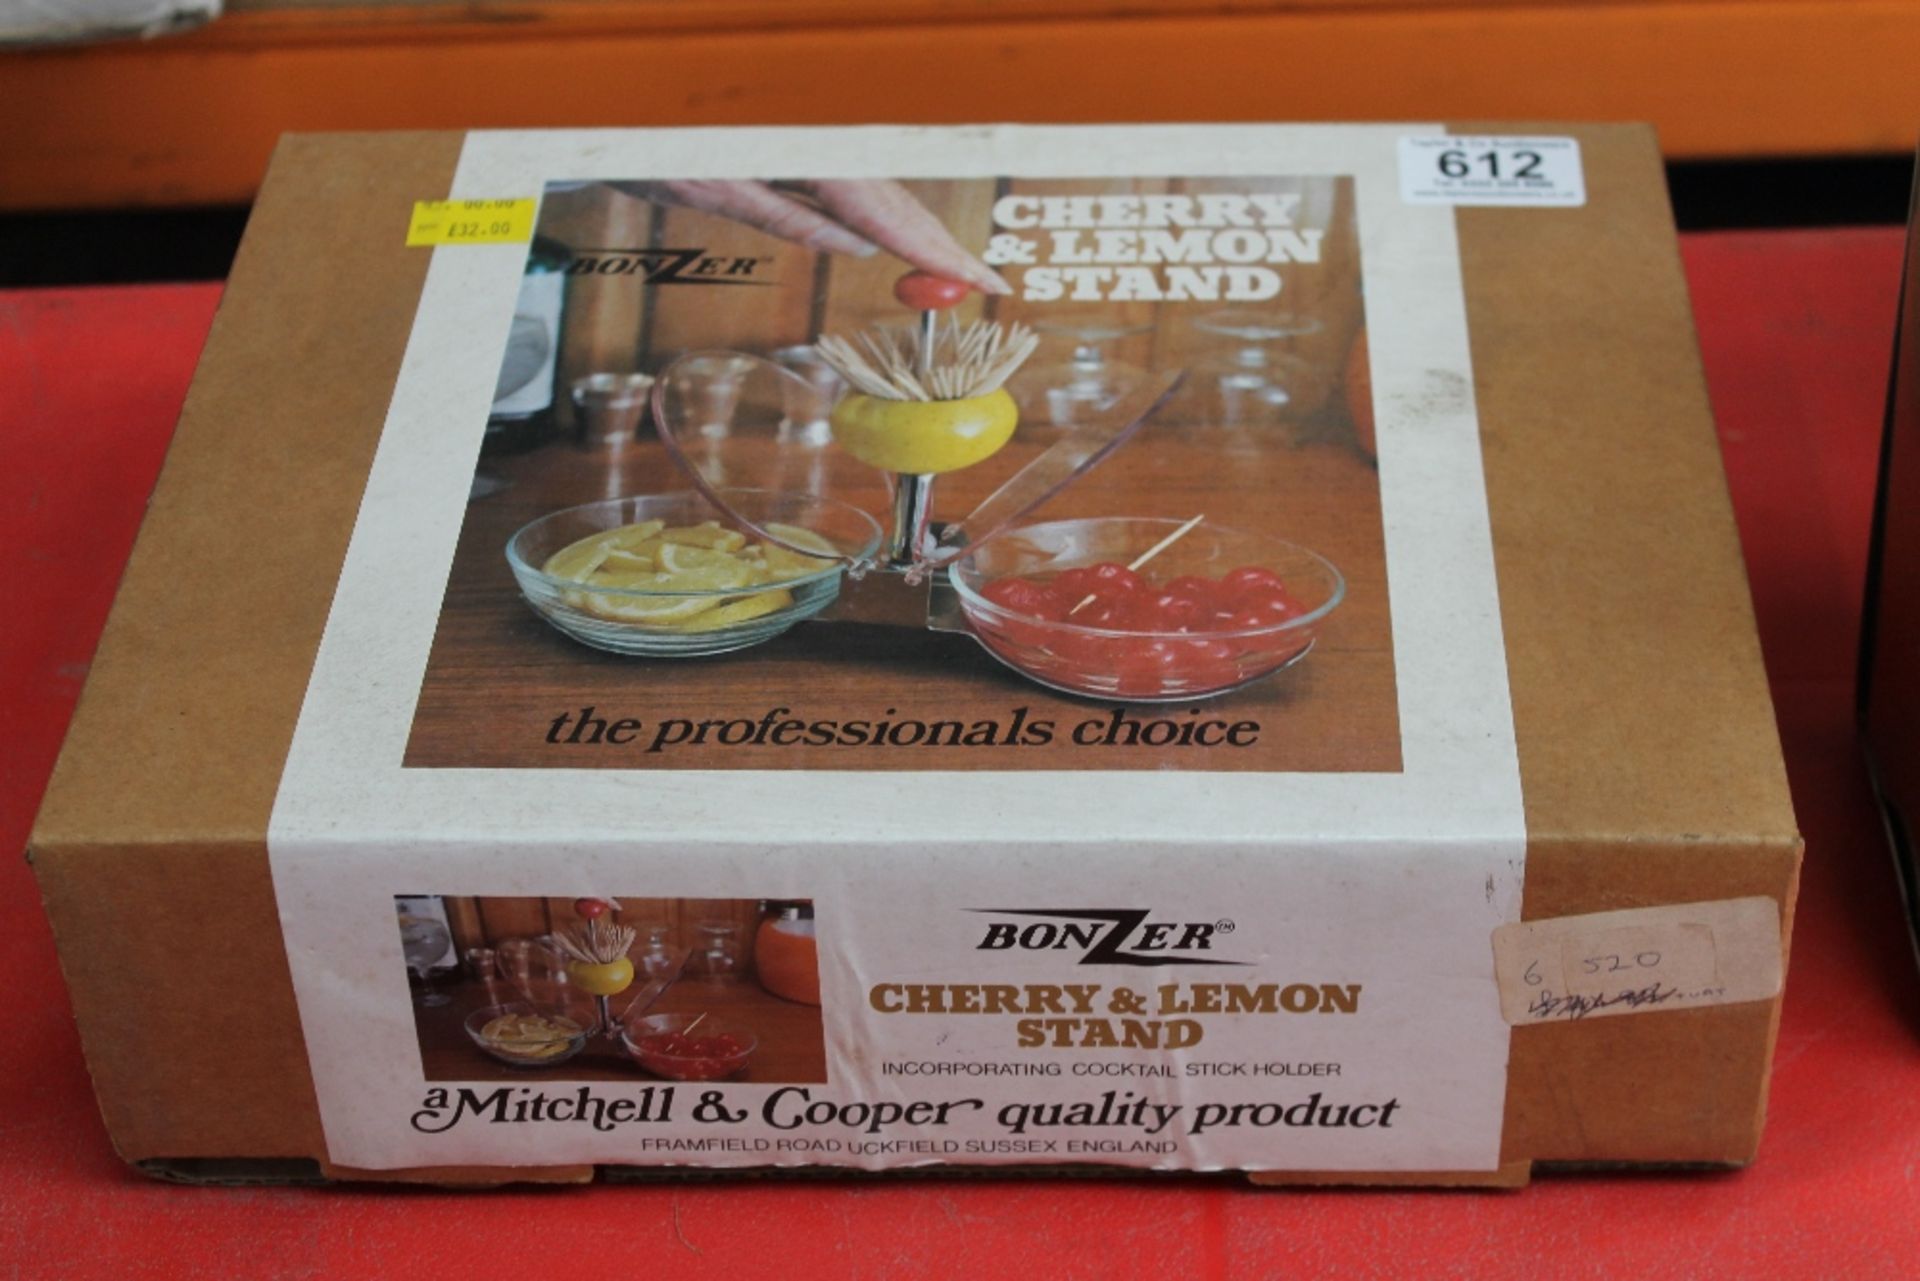 1 x lemon/cherry stand – NO VAT